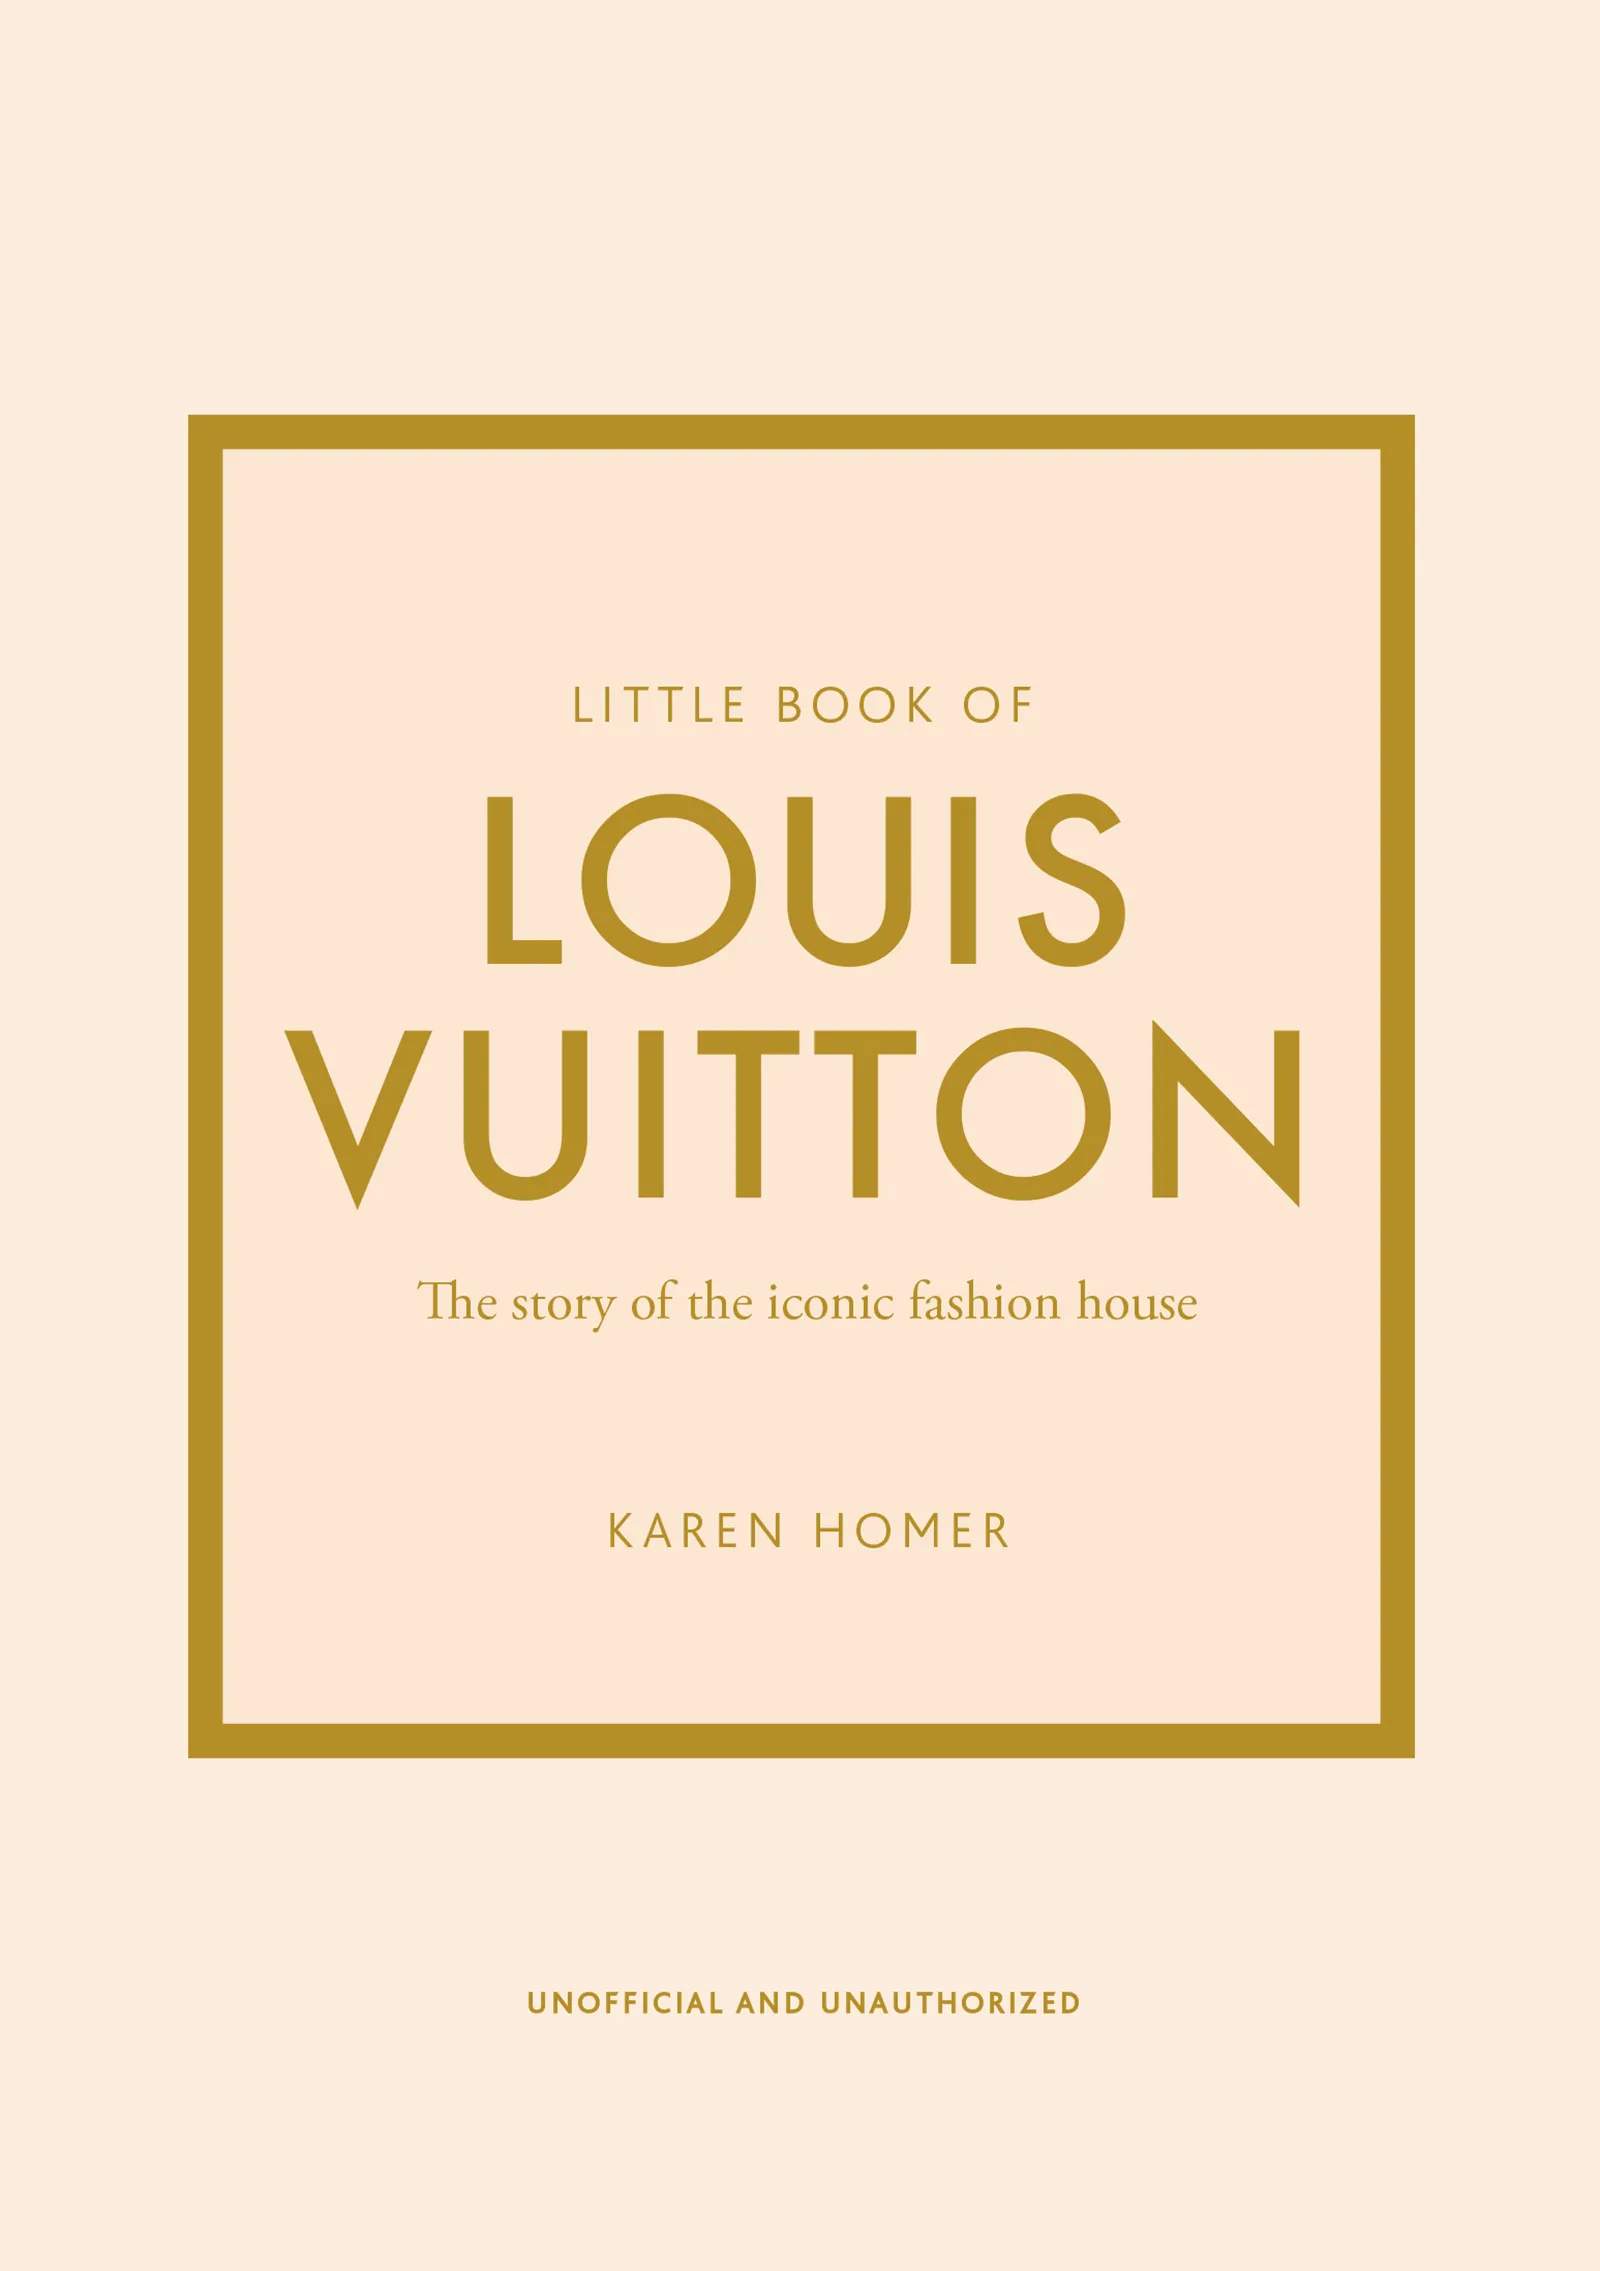 Little Book of Louis Vuitton øvrige bøger